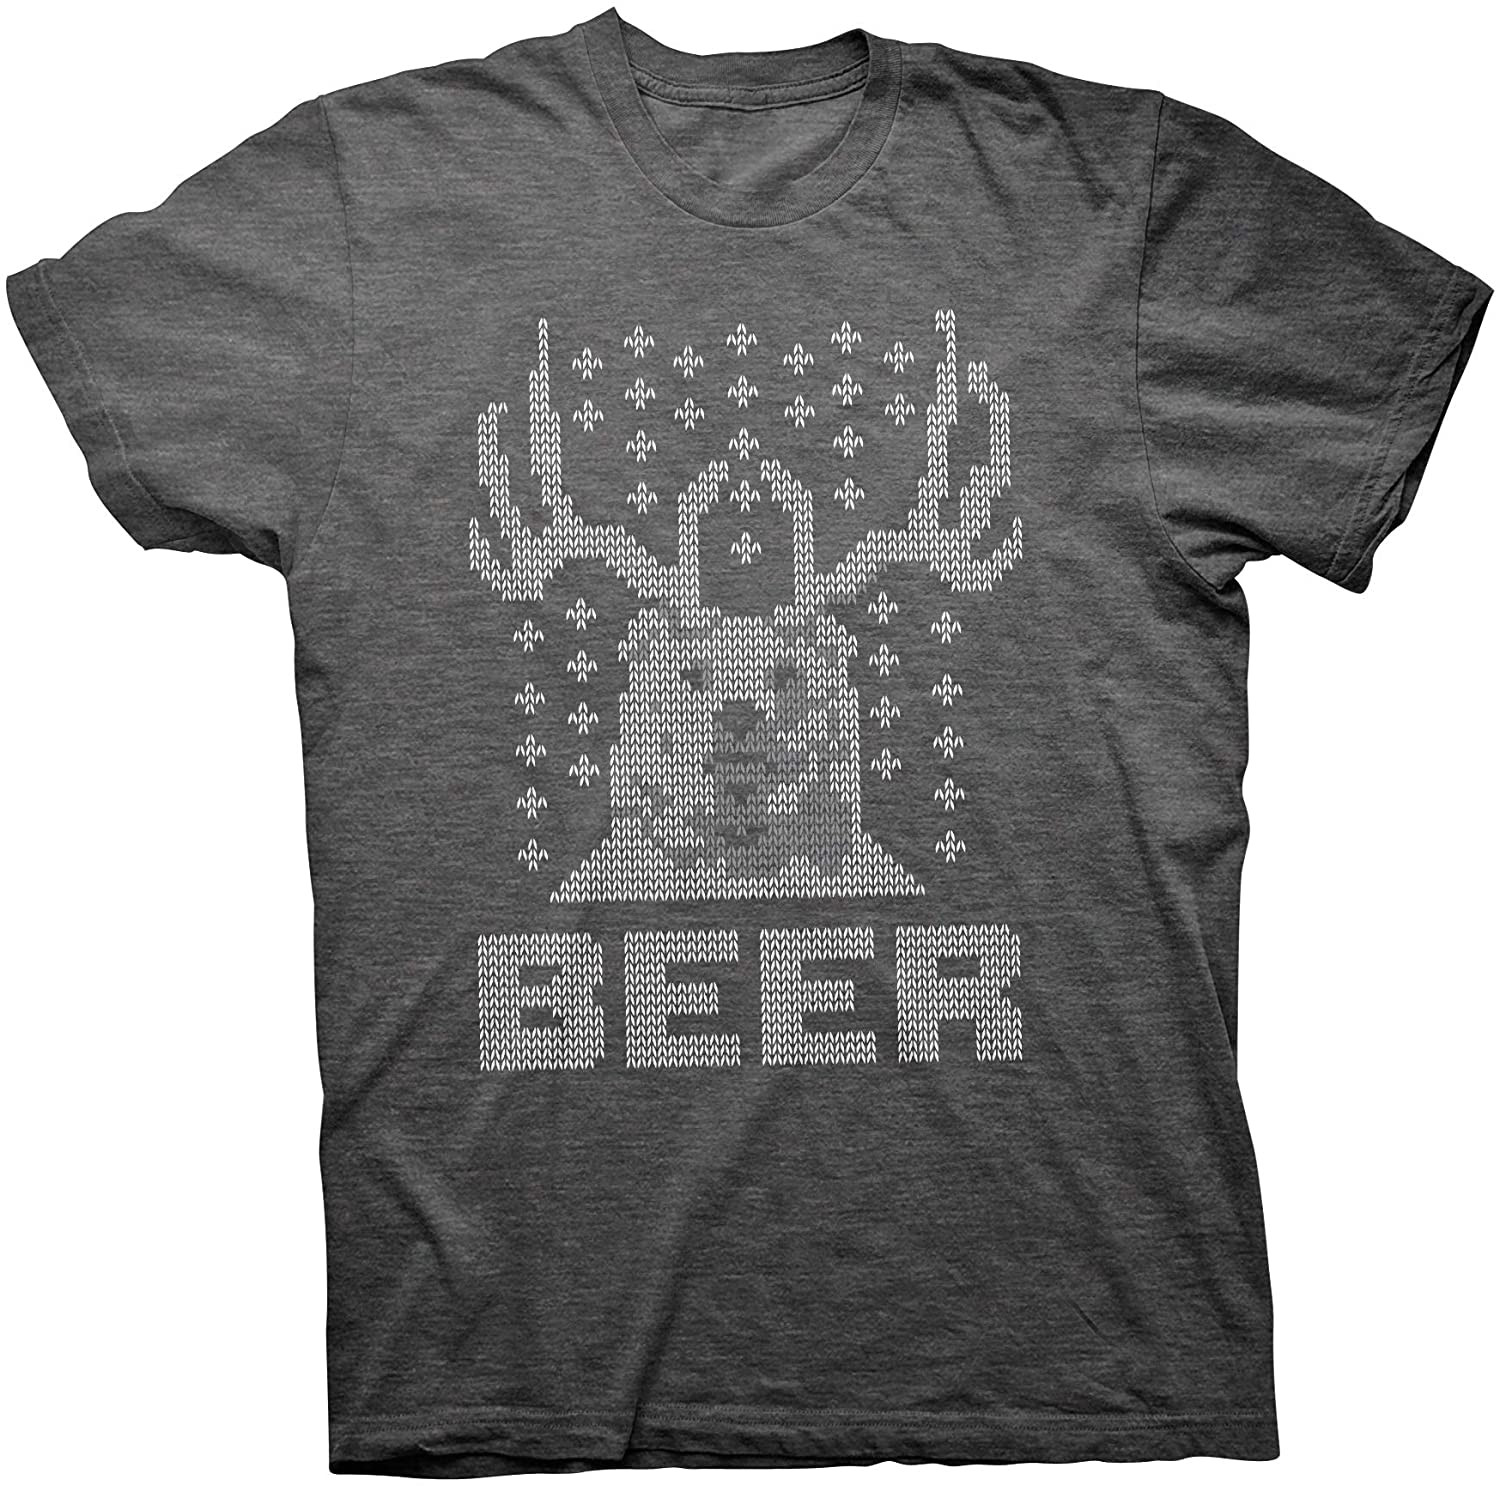 Bear + Deer = Beer - T-Shirt